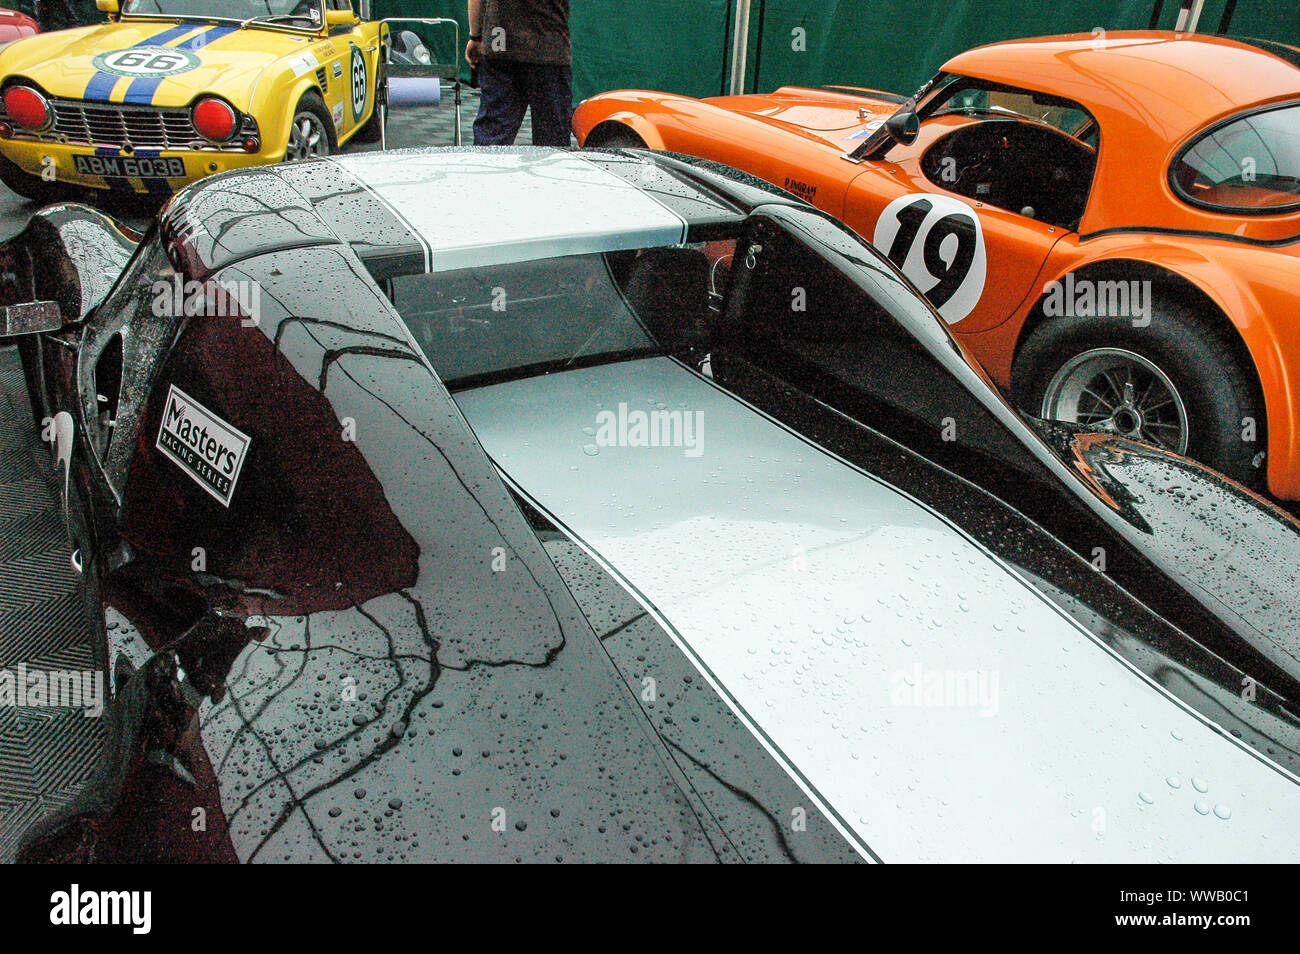 Racing cars at the padock Stock Photo